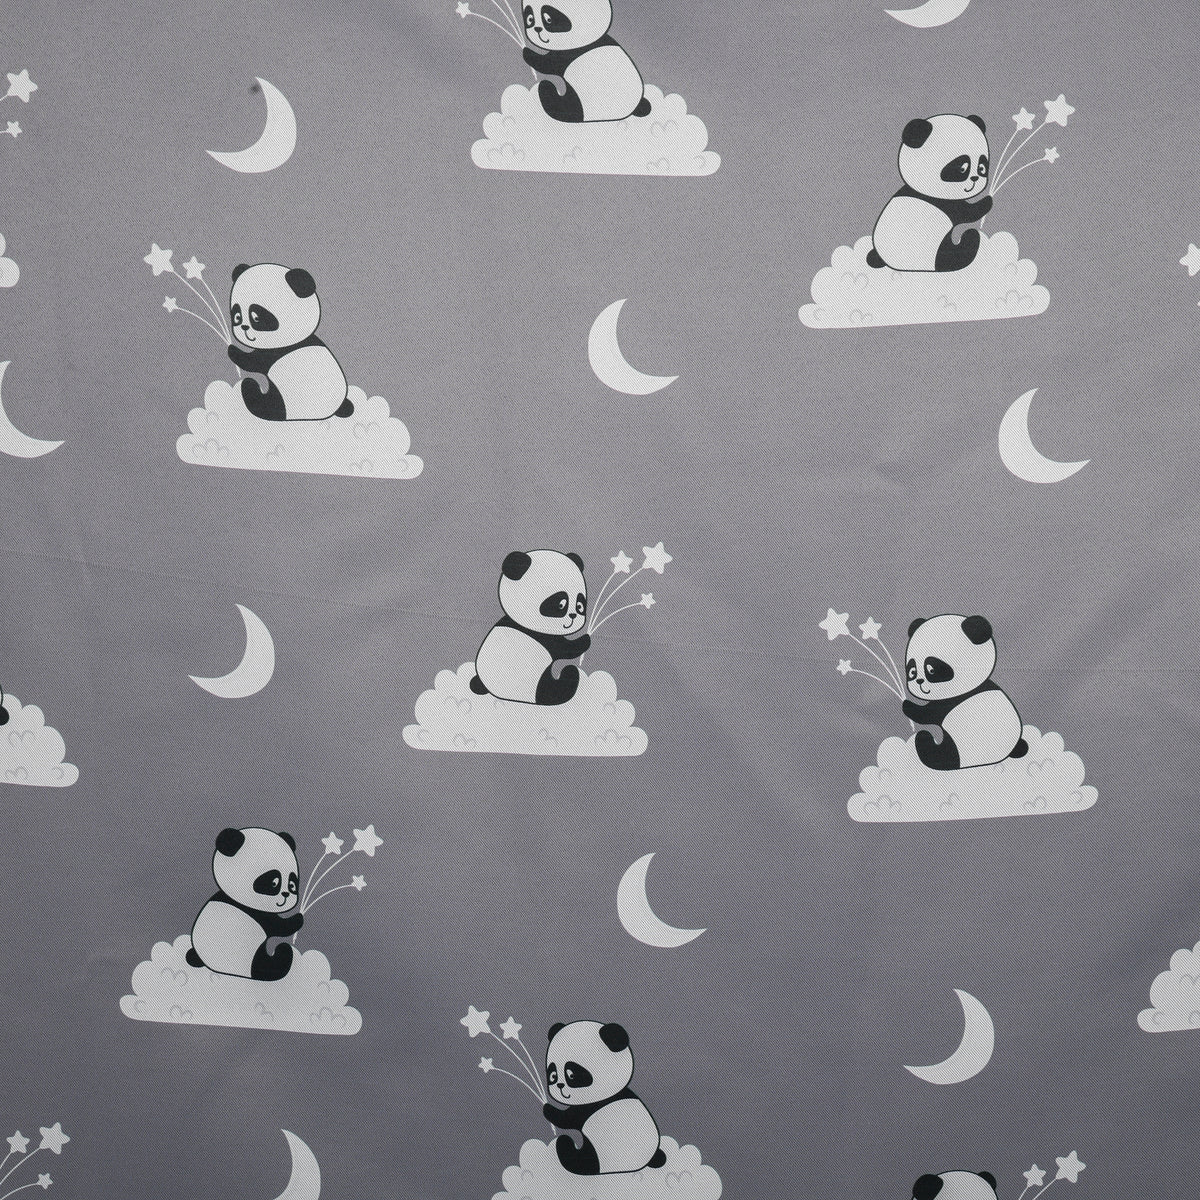 Blackout curtain gray panda